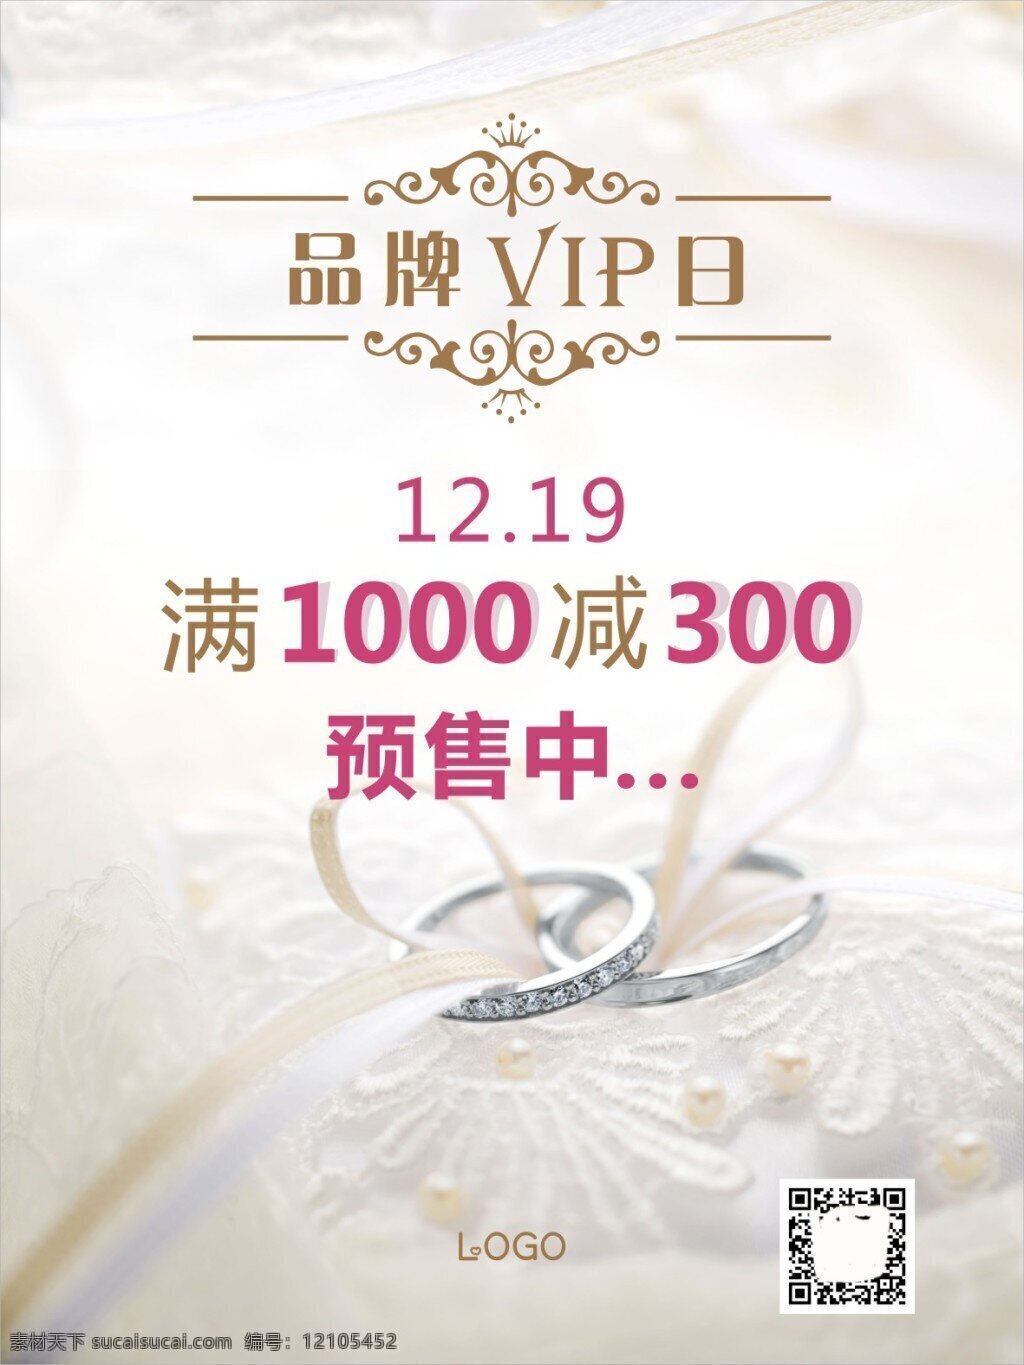 vip 婚庆 珠宝 戒指 海报 品牌vip vip日 满减活动 预售中 婚纱 淡雅 白色